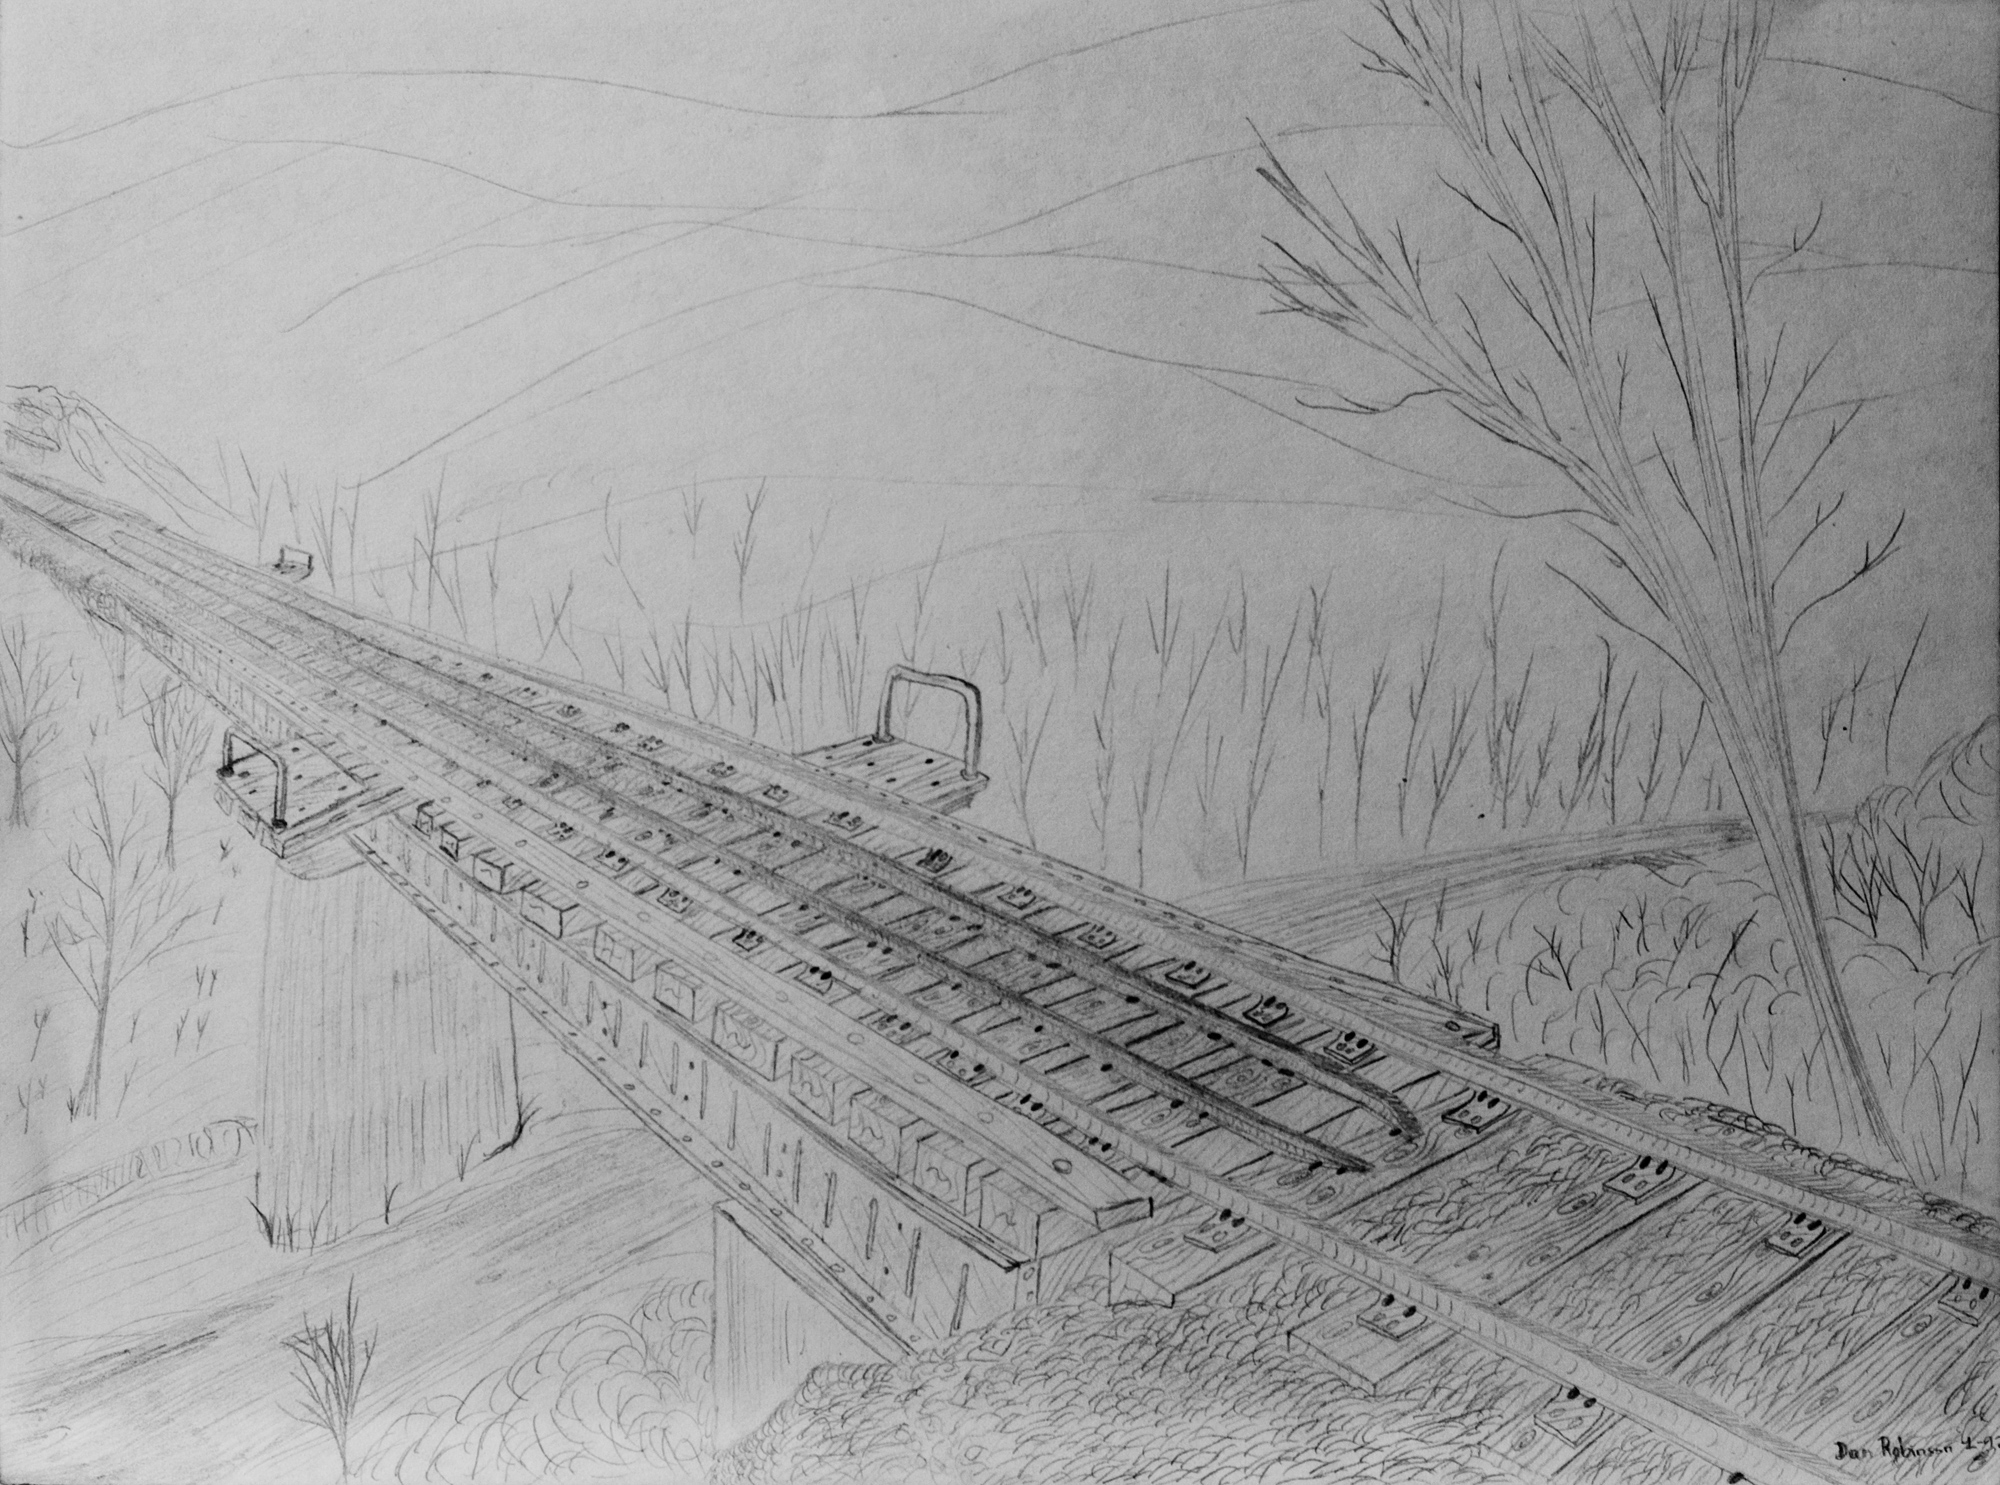 Baltimore and Ohio railroad bridge west of Washington, PA pencil sketch